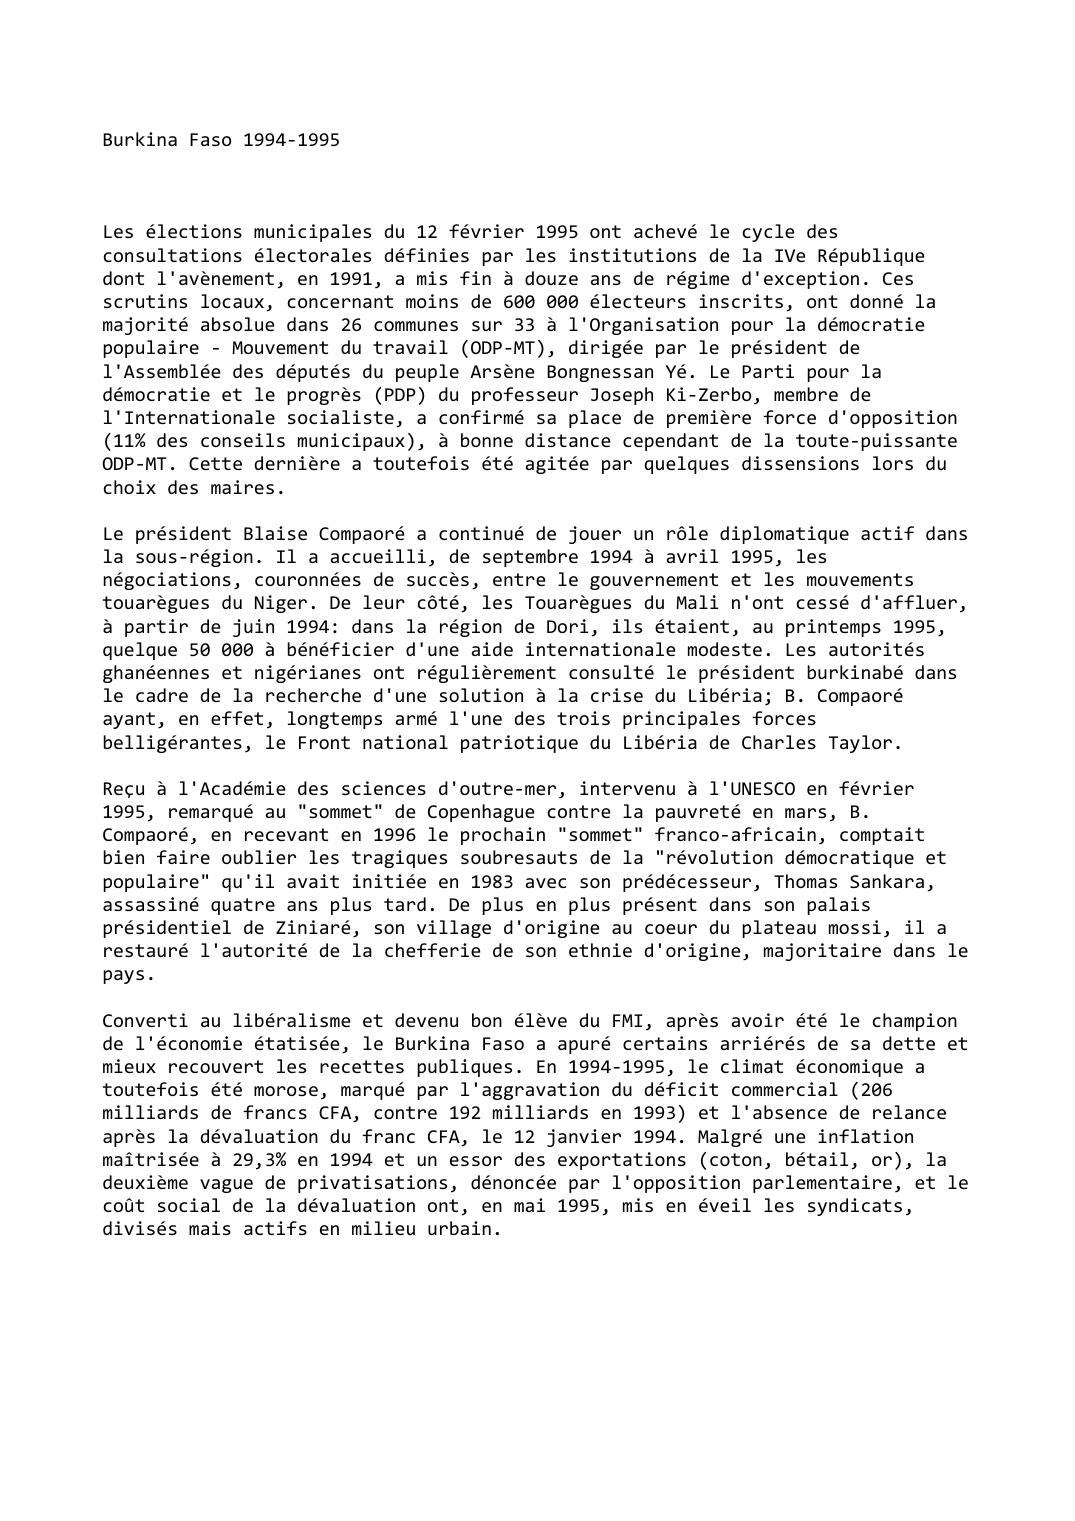 Prévisualisation du document Burkina Faso 1994-1995